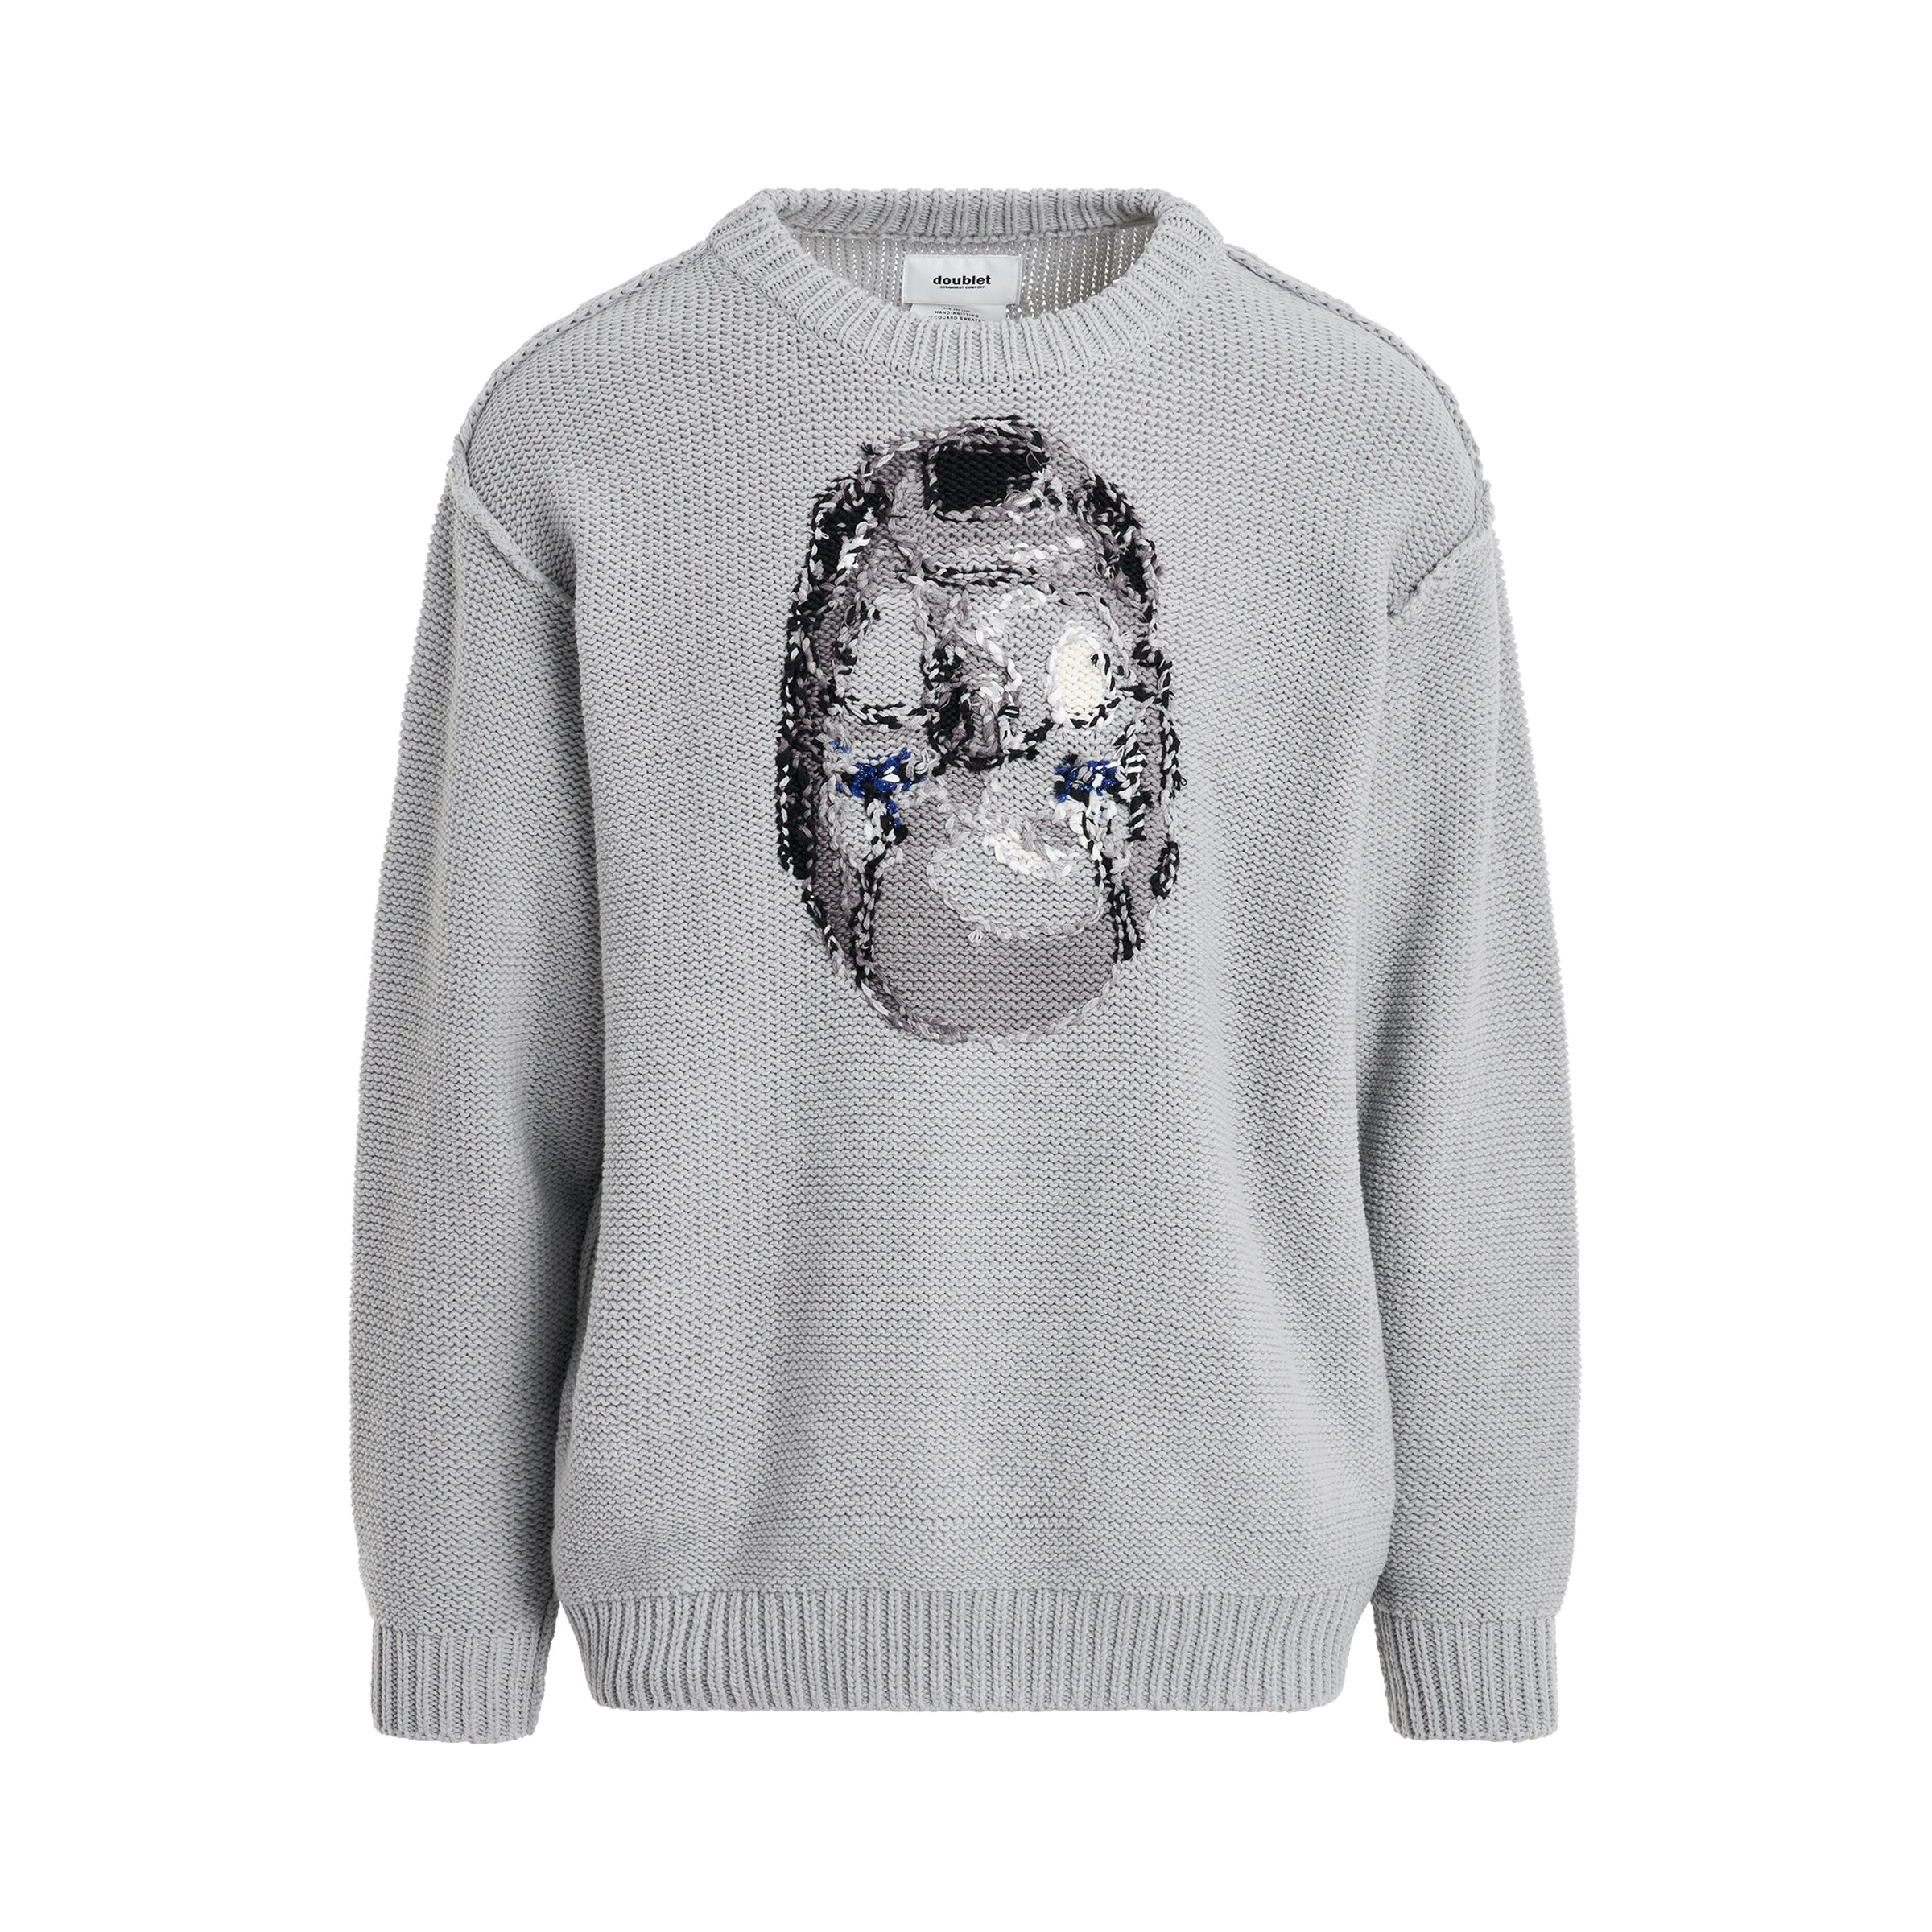 Hand-Knitting Jacquard Sweater in Grey - 1